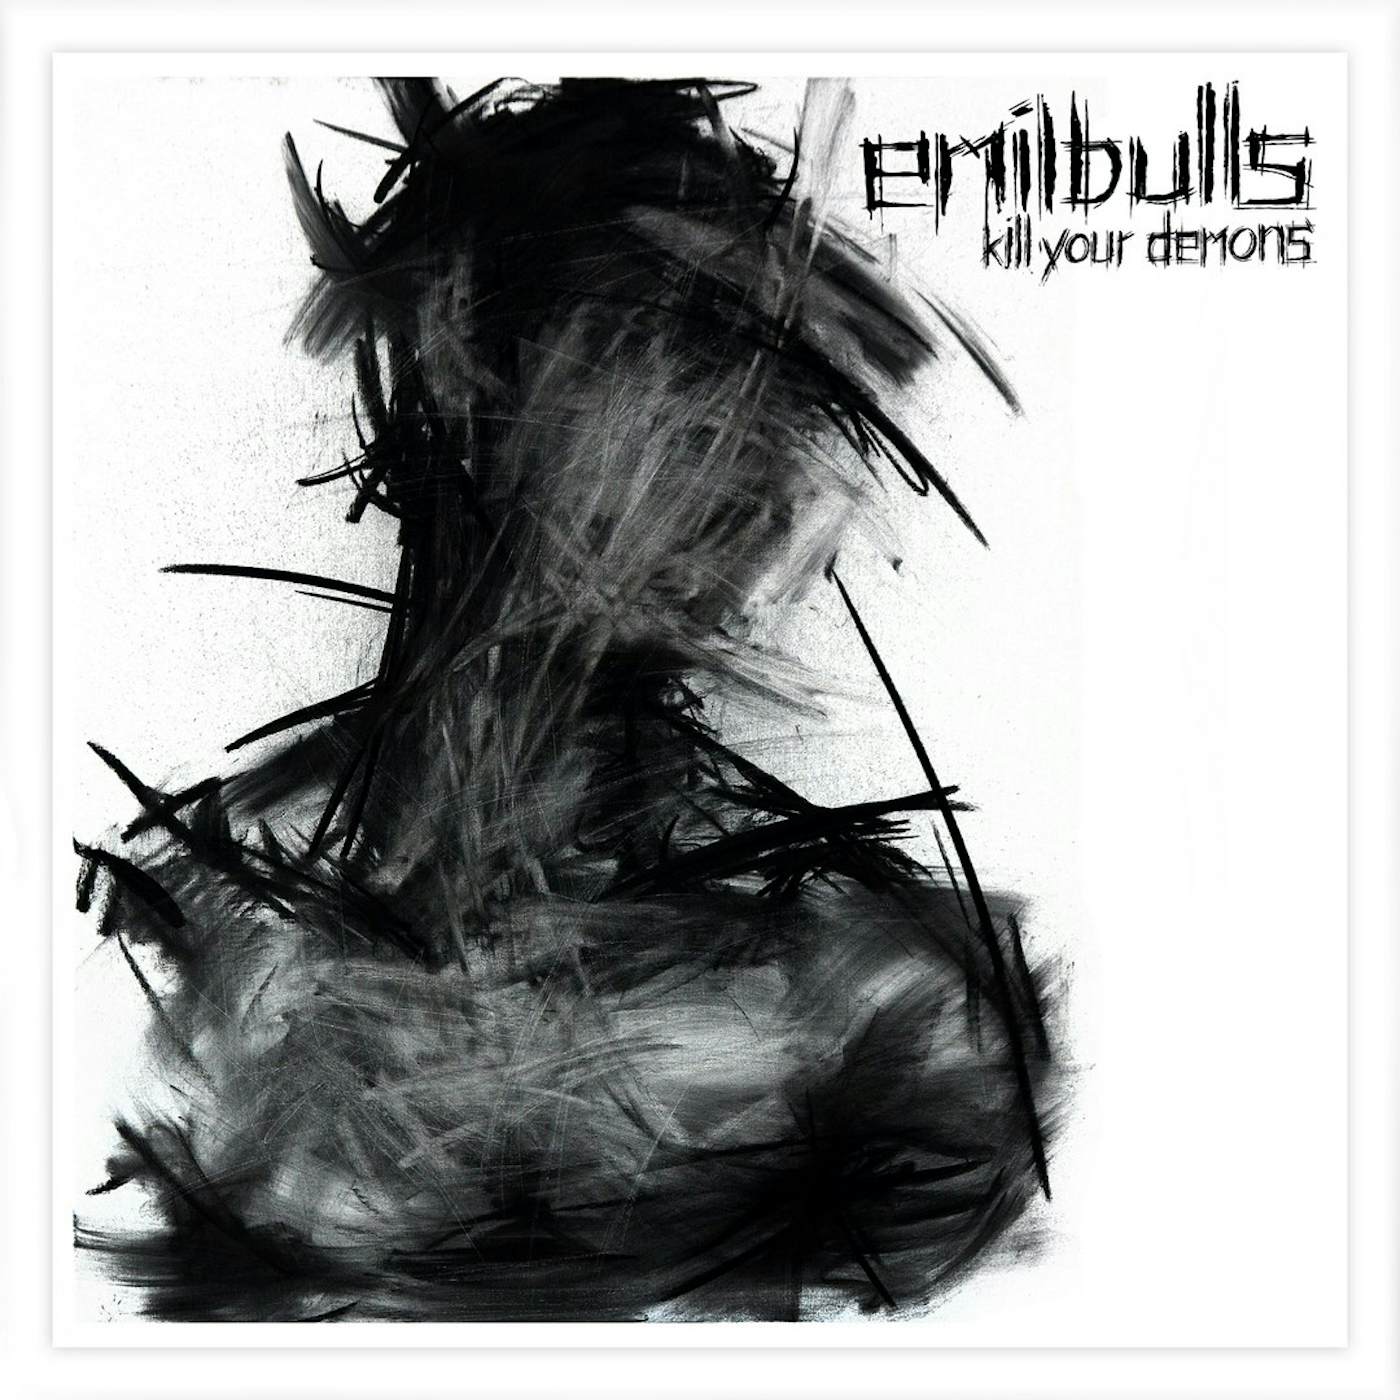 Emil Bulls KILL YOUR DEMONS CD